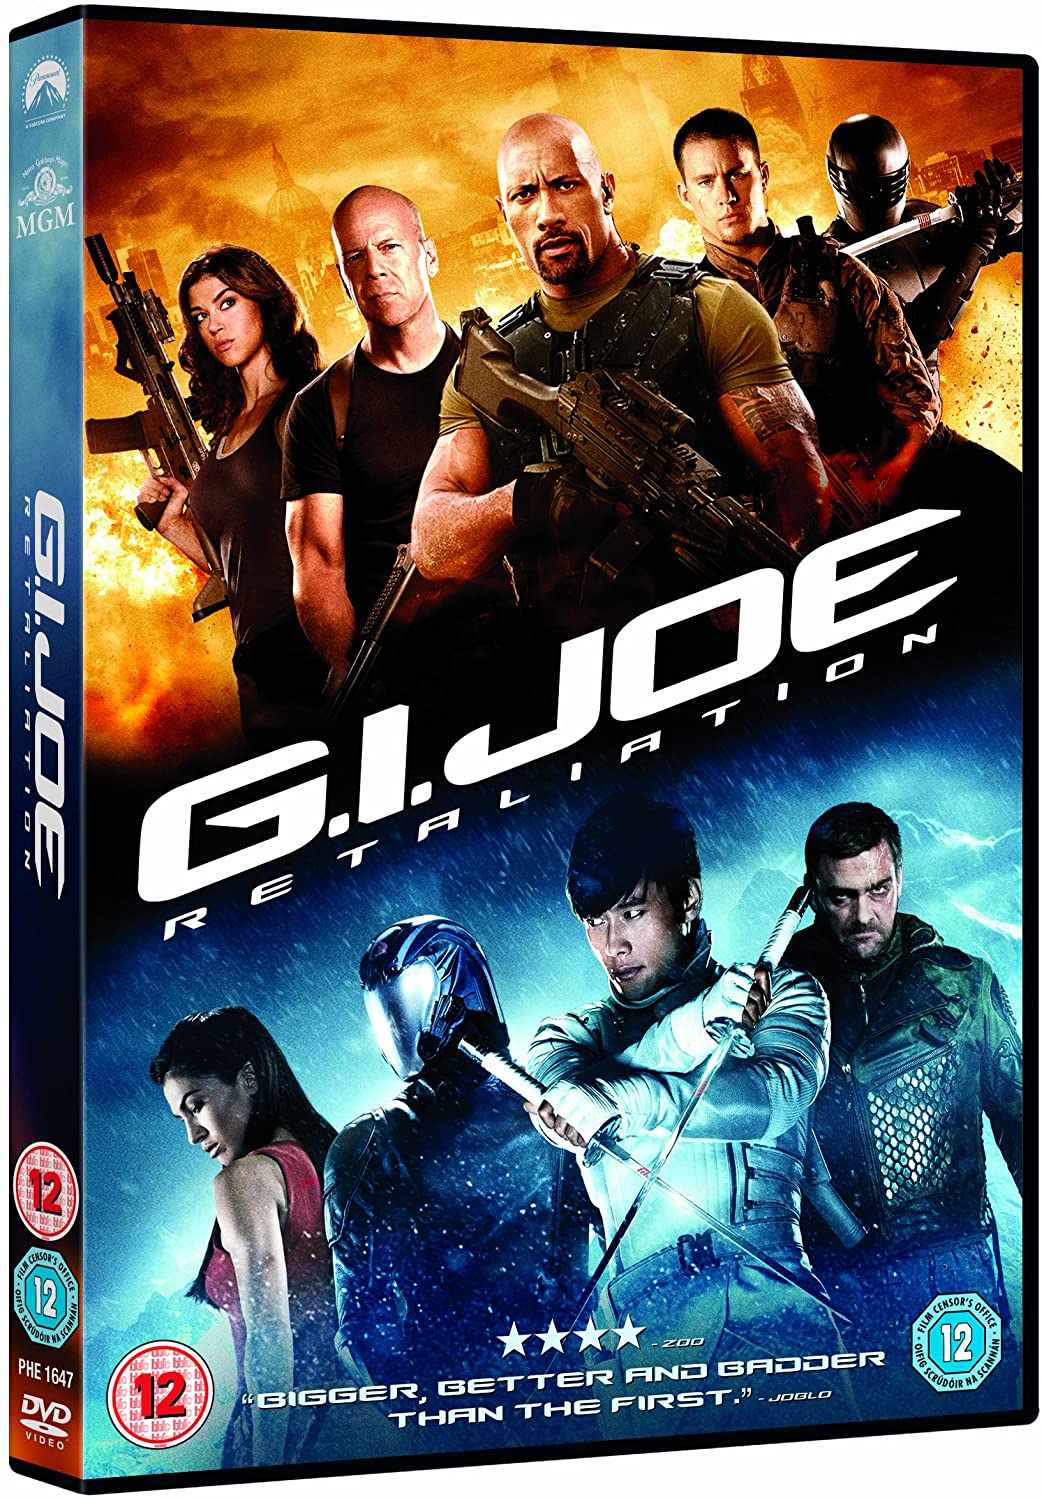 G.I. Joe: Retaliation - Action/Adventure [DVD]